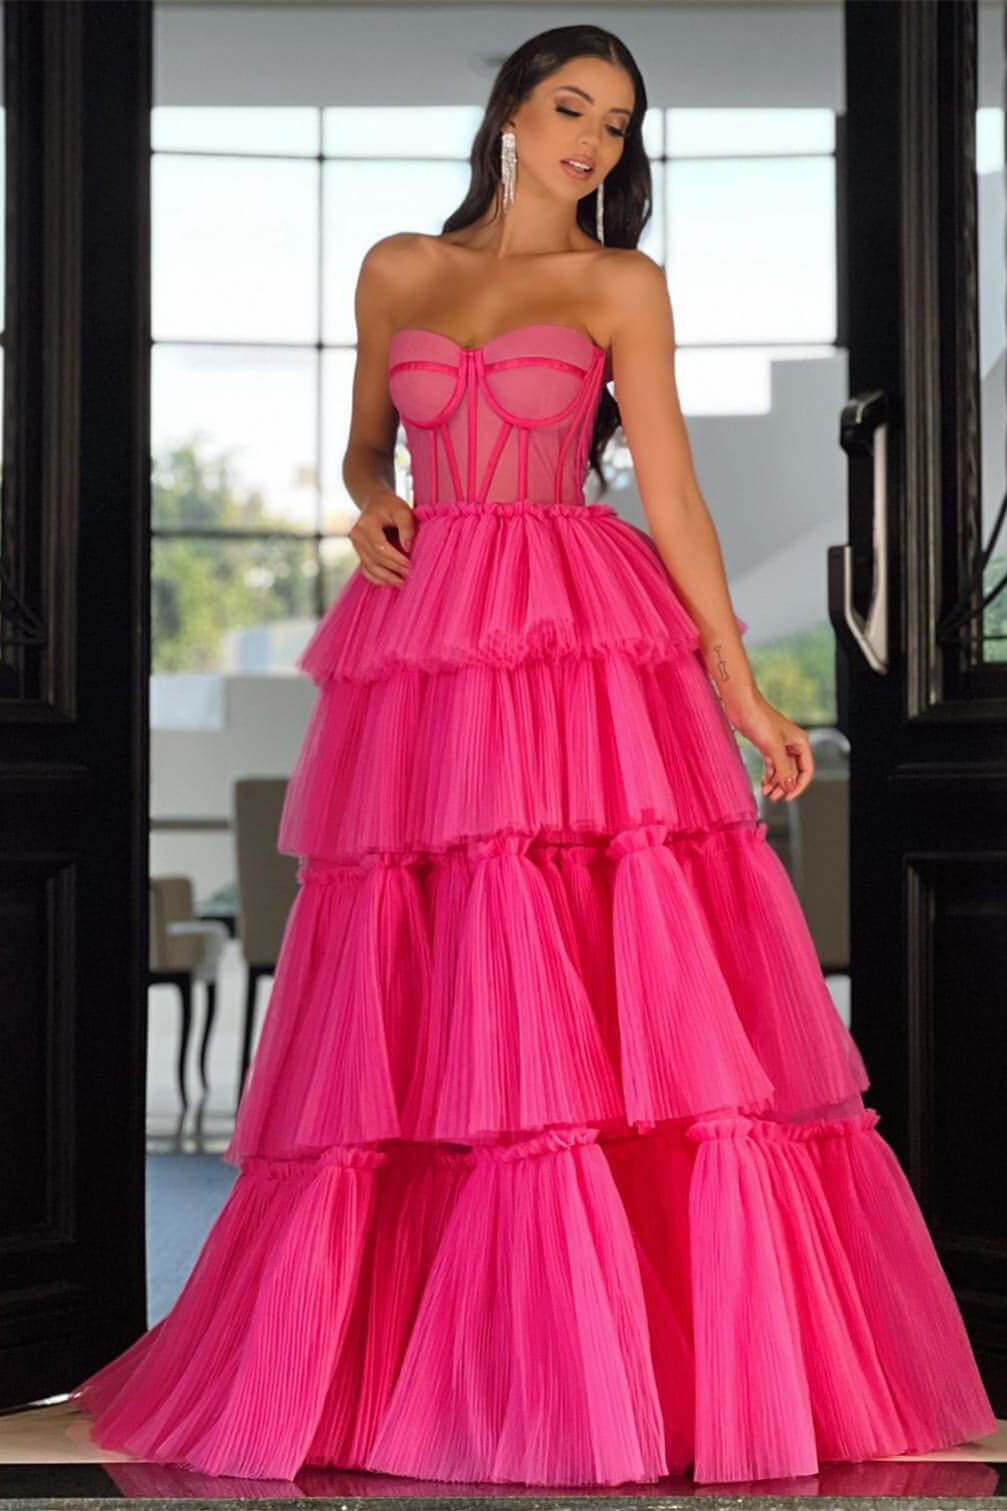 Oknass Elegant Sweetheart Prom Dress Long Sleeveless Layers Hot Pink